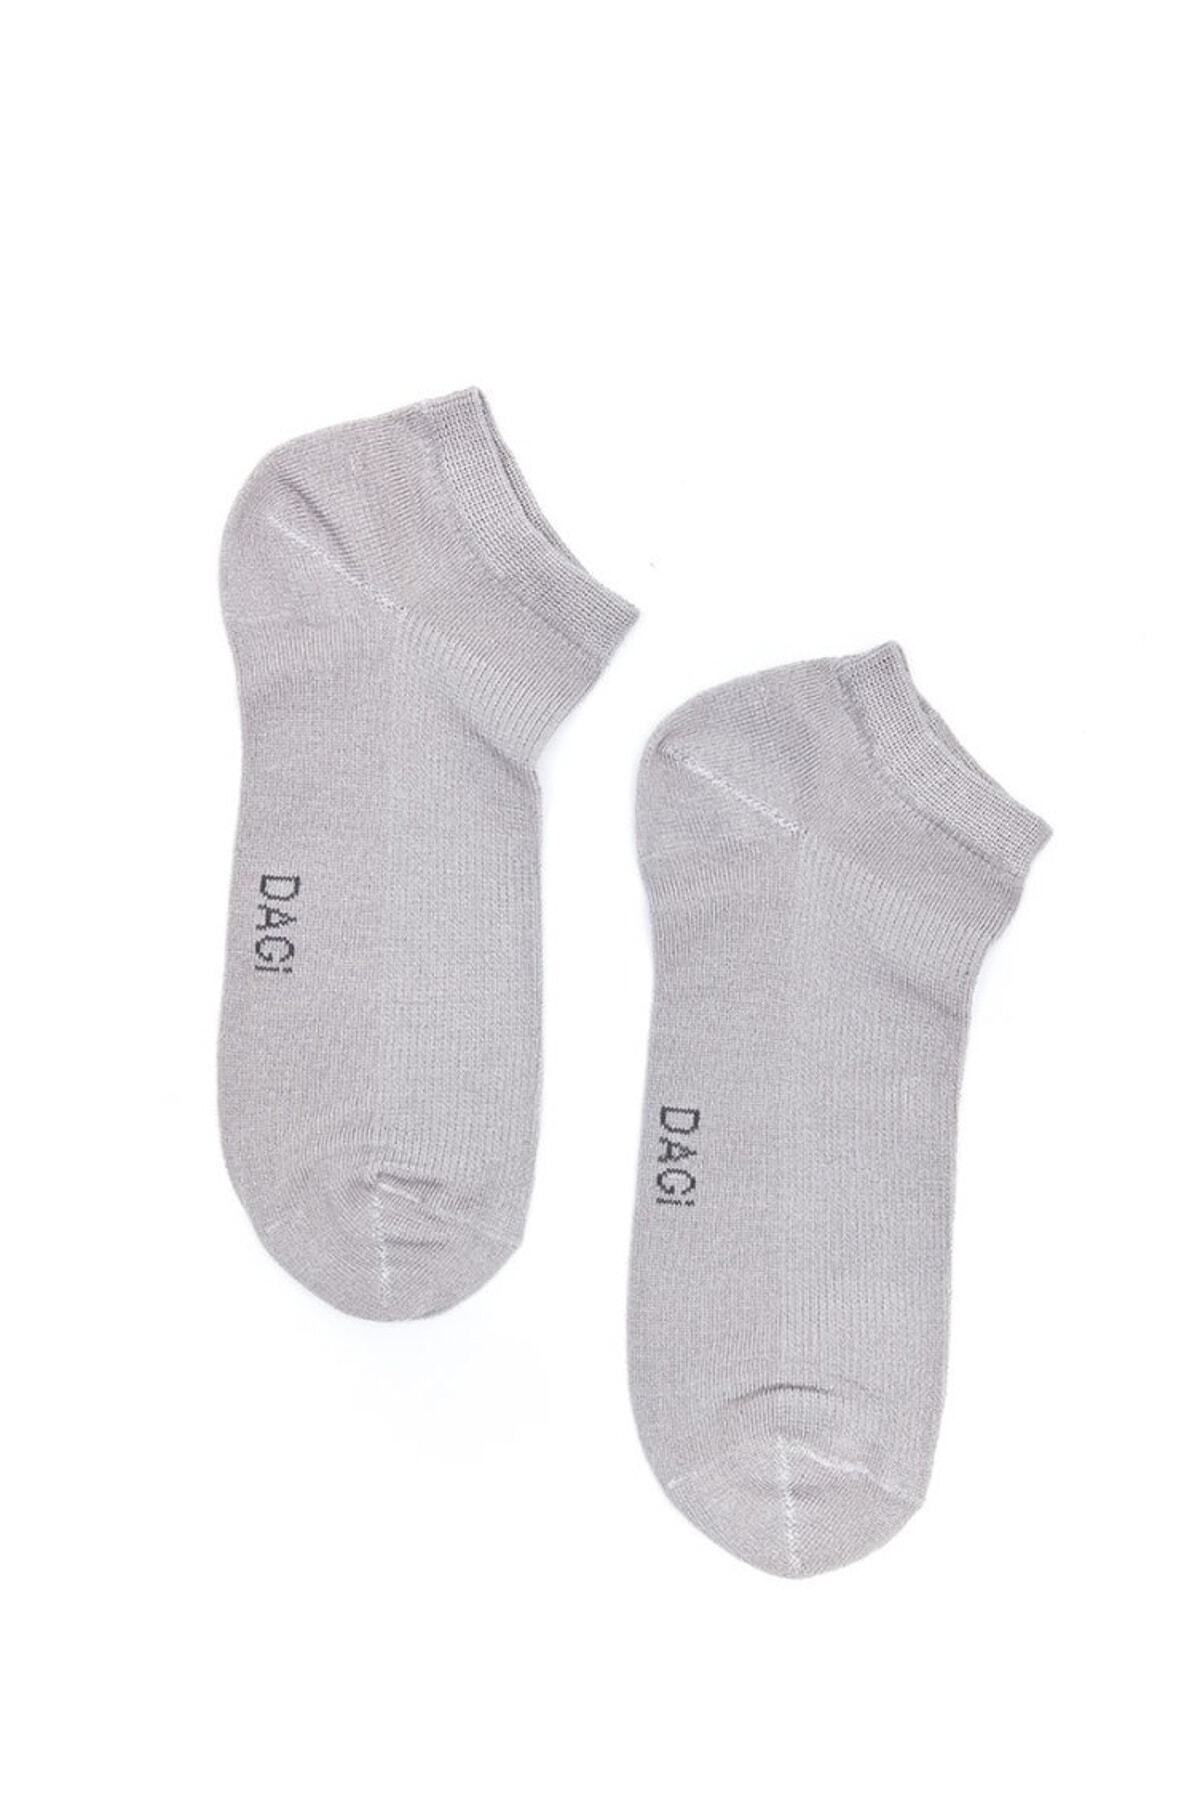 Dagi Men's Gray Bamboo Booties Socks